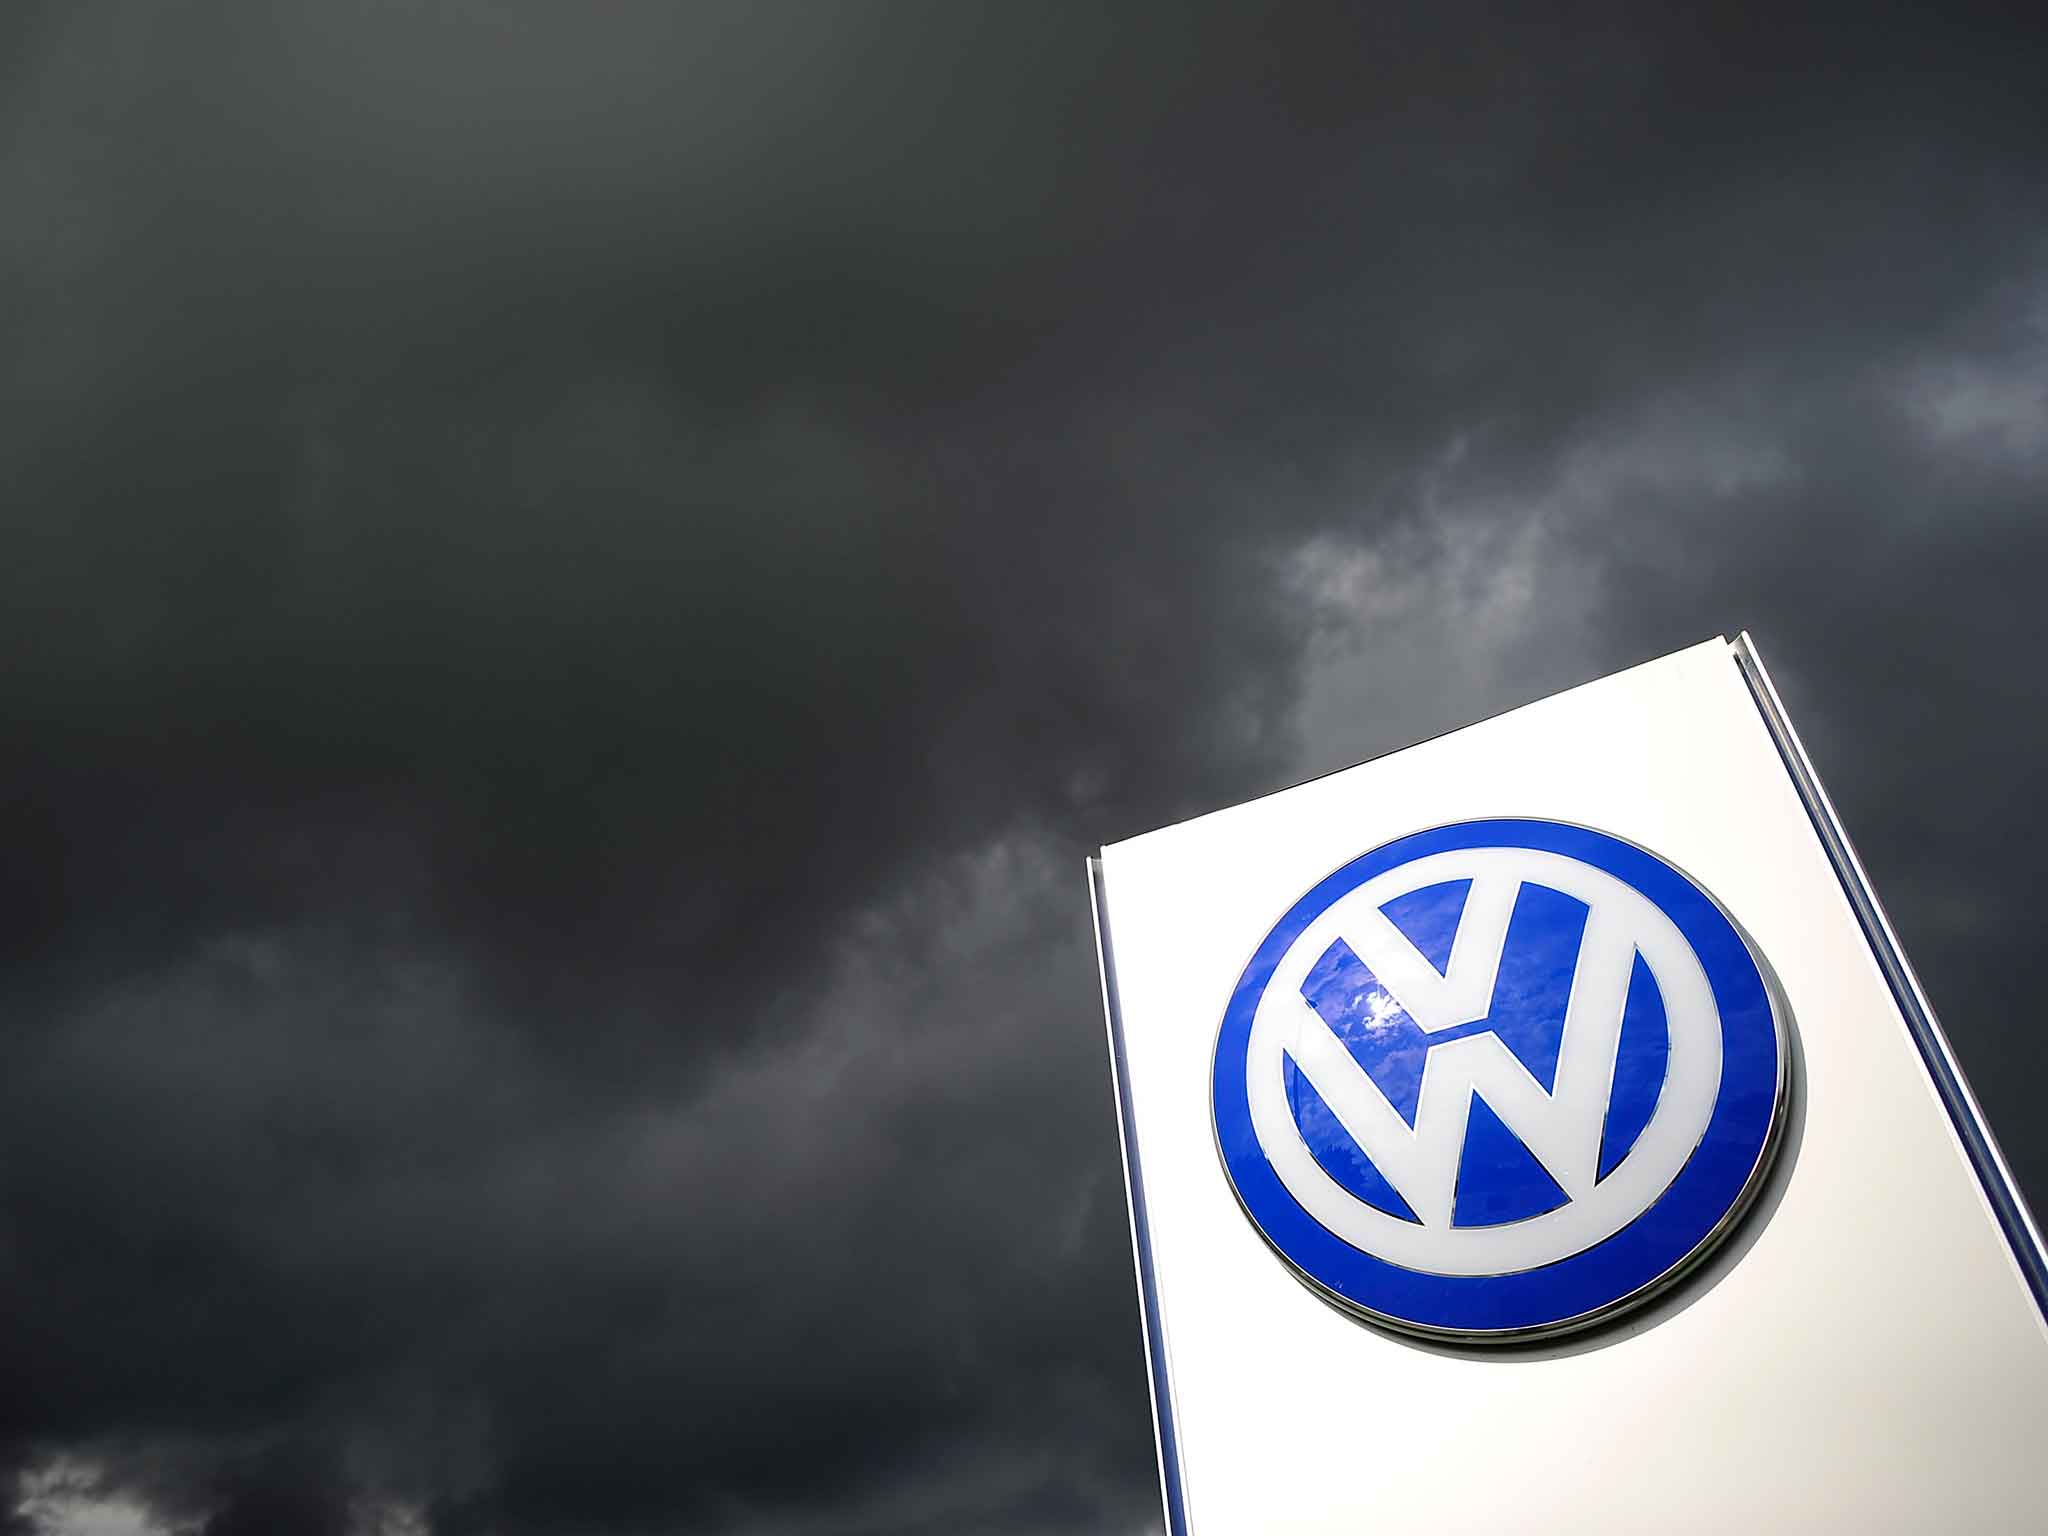 Despite the revelations, Volkswagen cars are still in demand